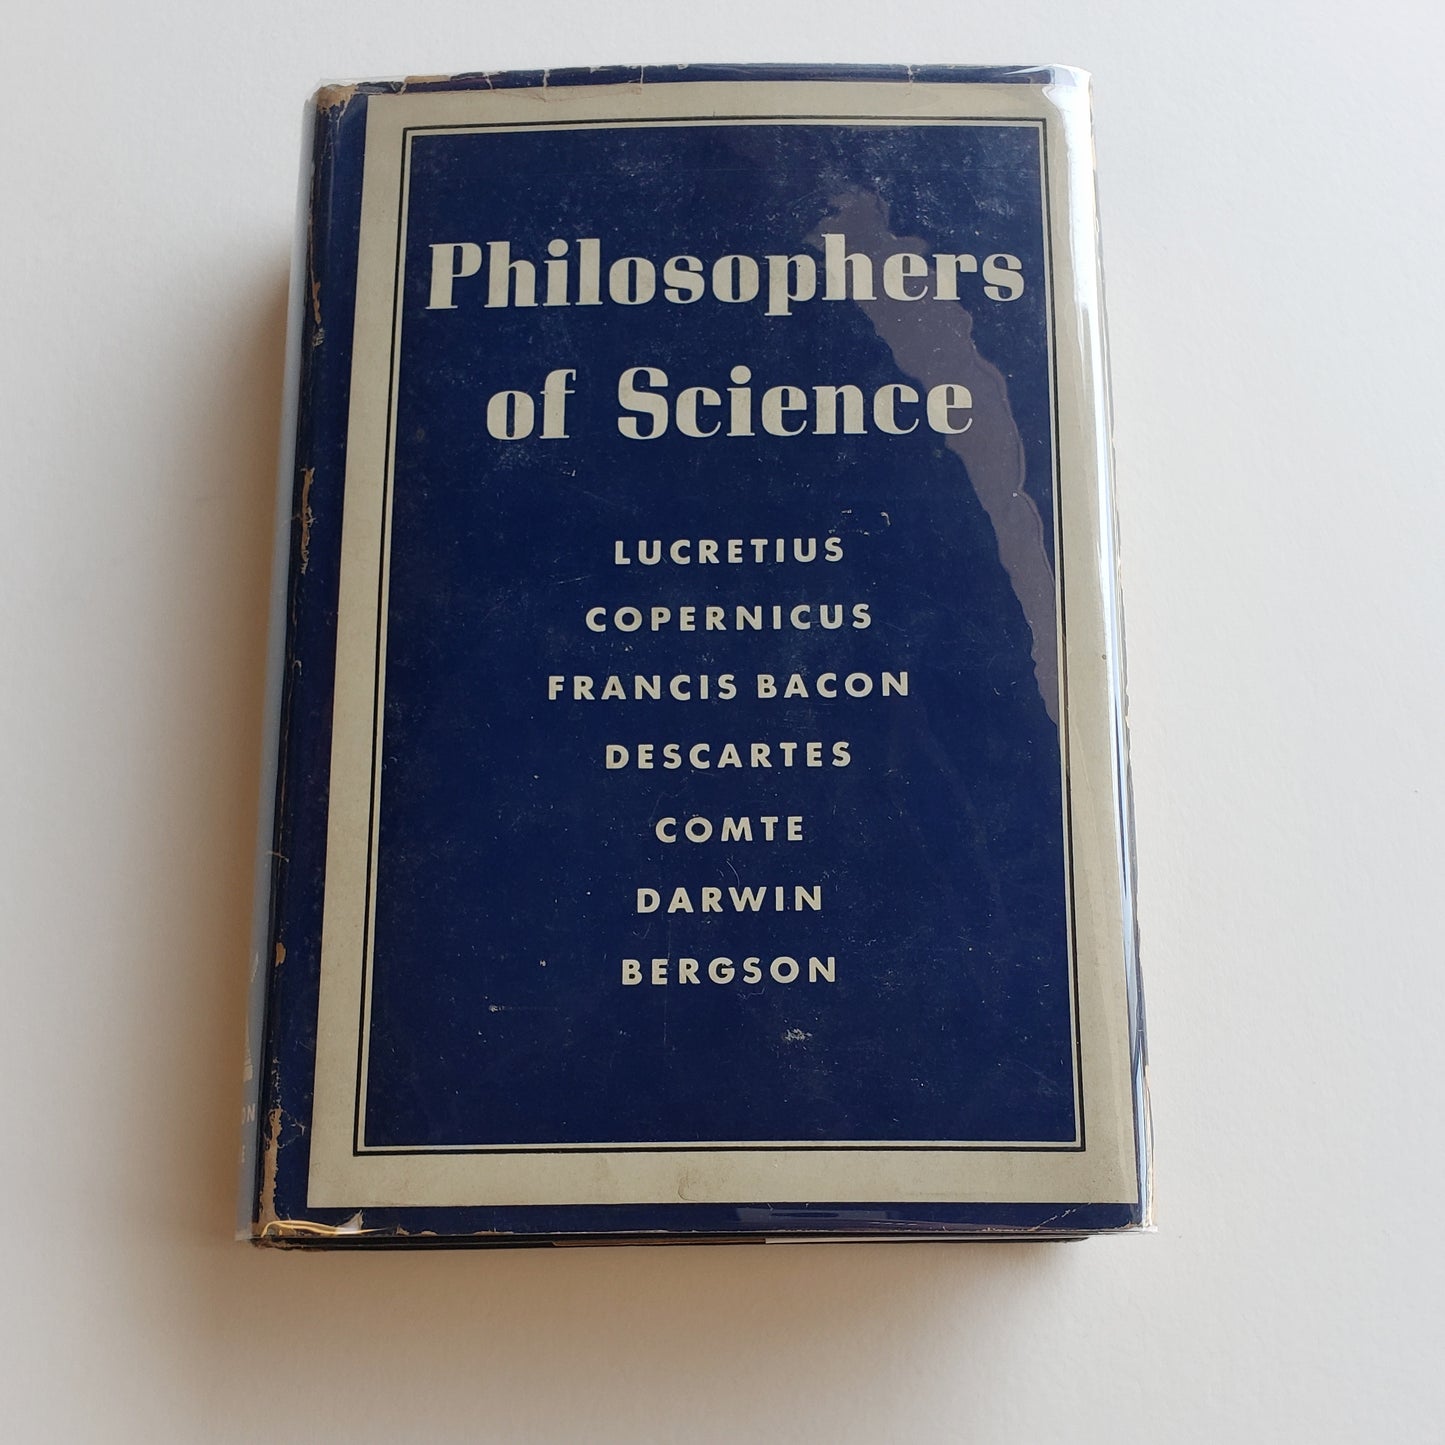 Vintage Book - Philosophers of Science: Lucretius, Copernicus, Francis Bacon, Descartes, Comte, Darwin, Bergson (Science)